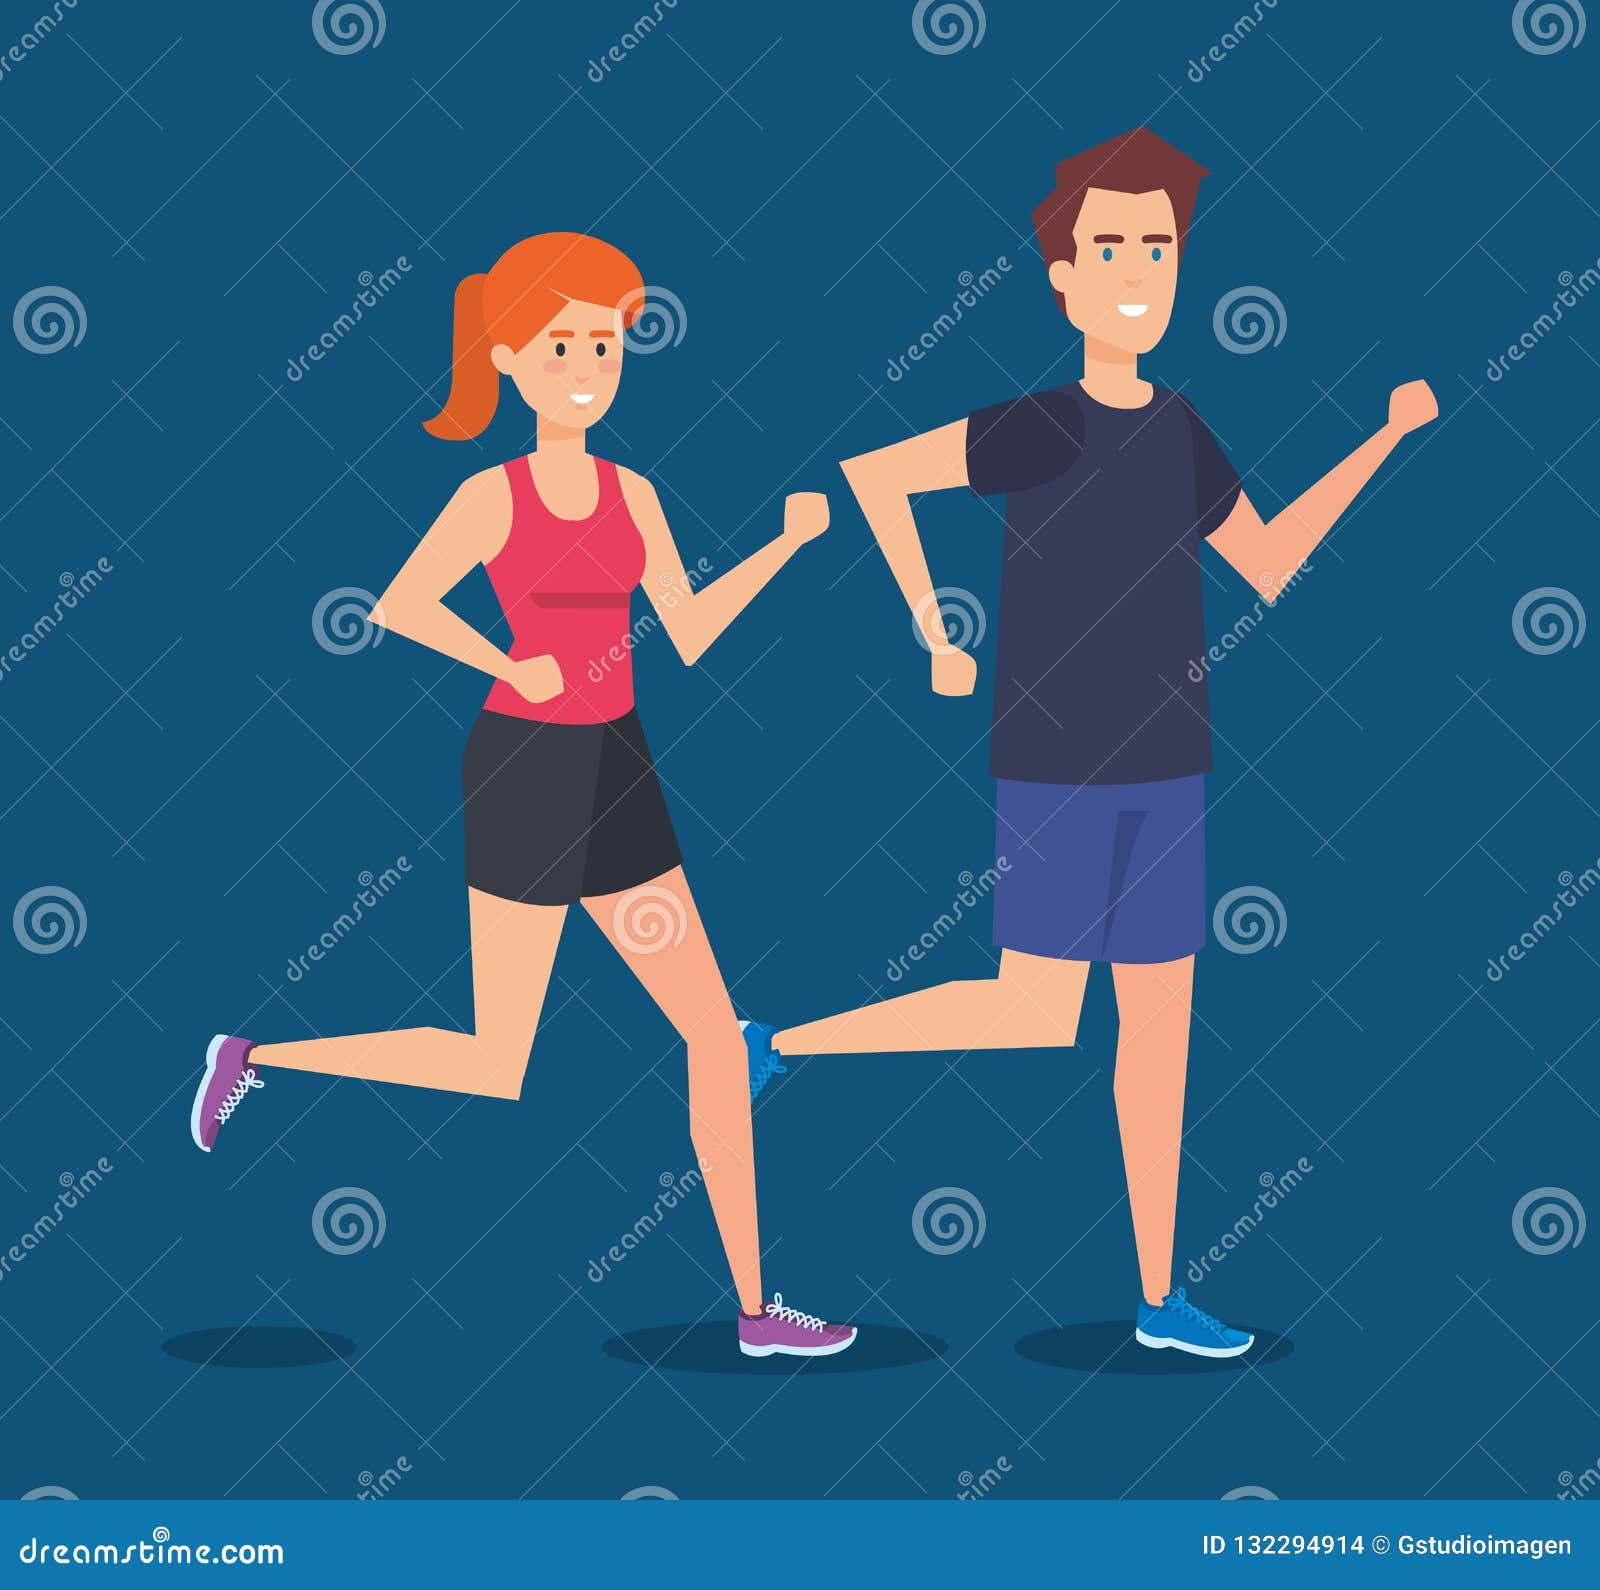 Fitness Girl and Boy Design Stock Vector - Illustration of running ...